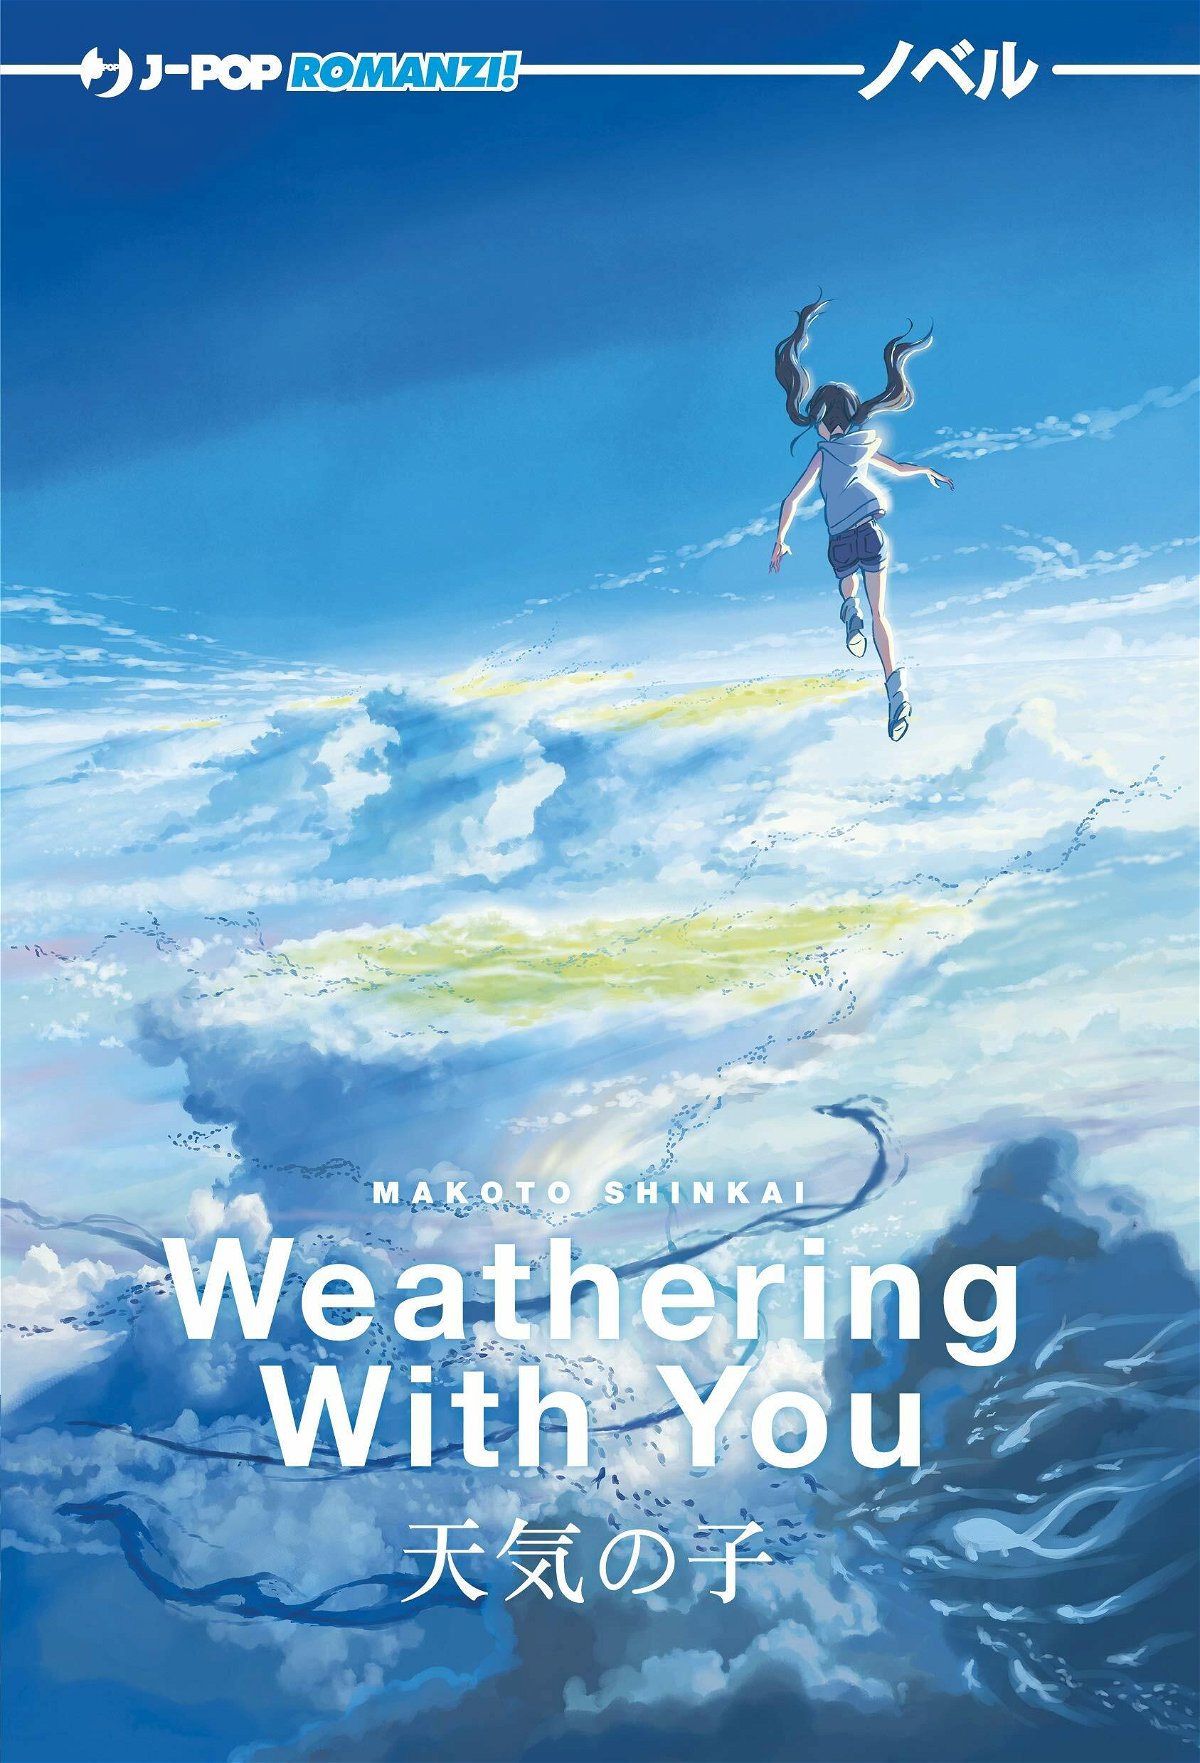 Il romanzo di Weathering With You